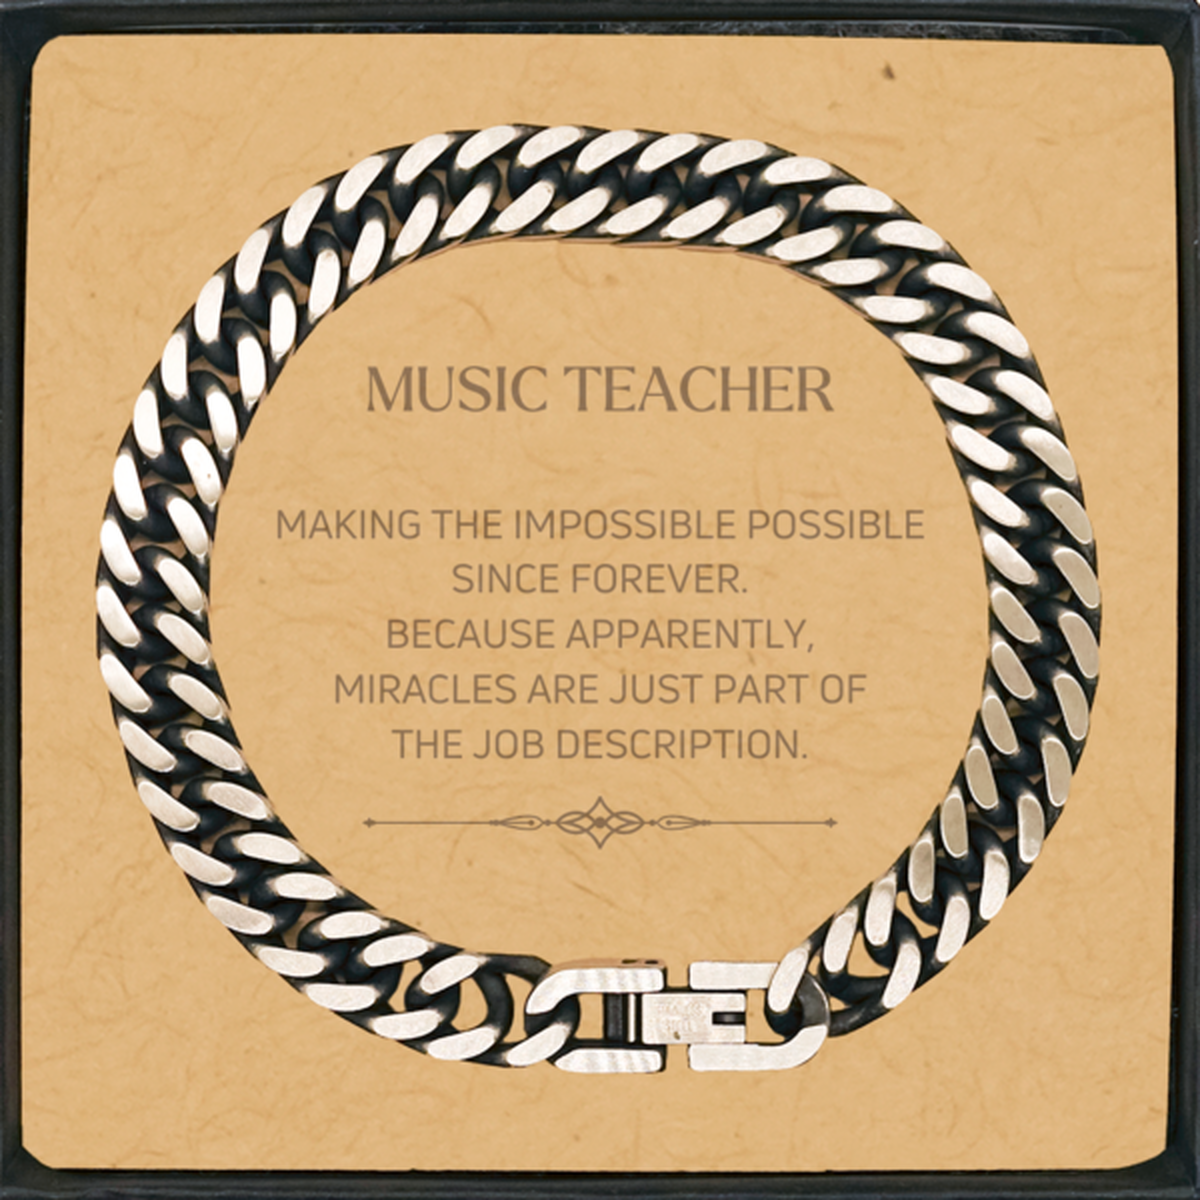 Funny Music Teacher Gifts, Miracles are just part of the job description, Inspirational Birthday Cuban Link Chain Bracelet For Music Teacher, Men, Women, Coworkers, Friends, Boss